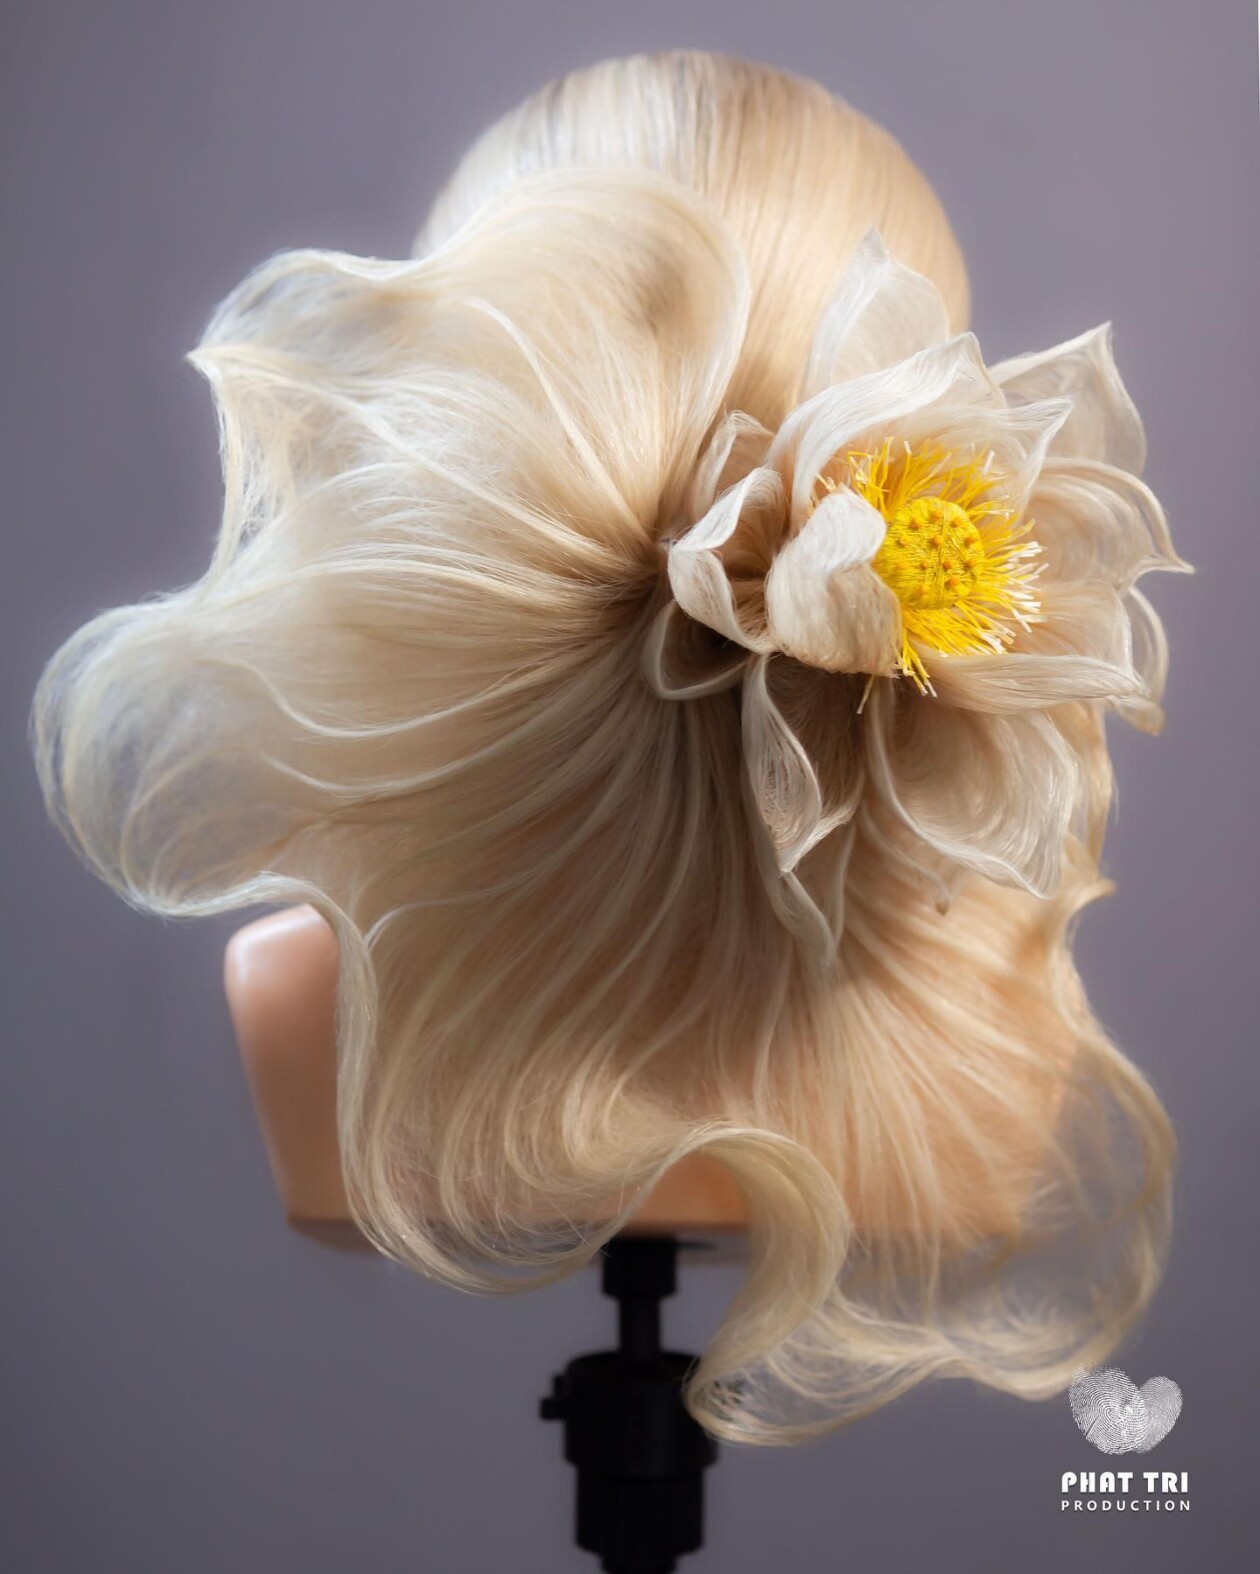 Beautiful Hairstyles That Look Like Ornate Flowers By Nguyen Phat Tri (1)